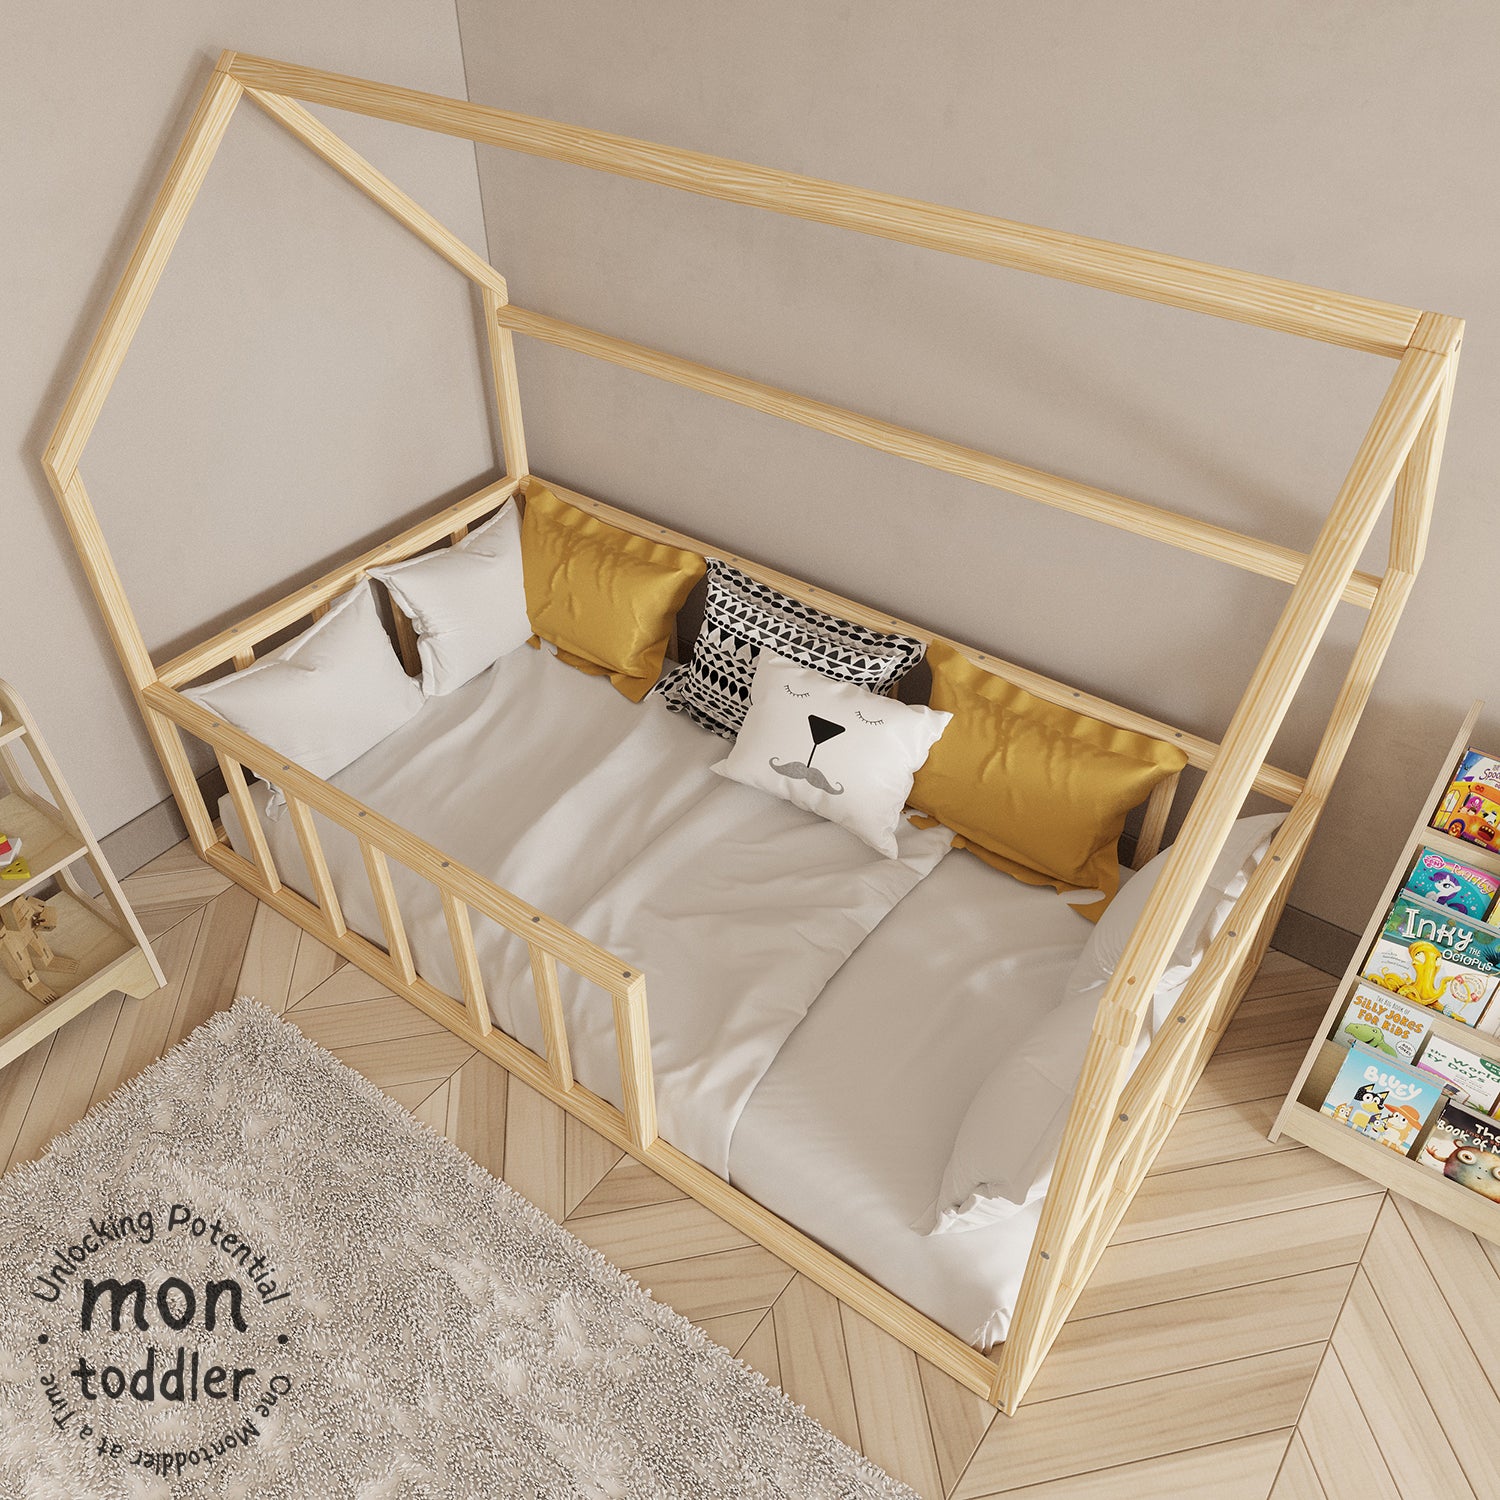 Montessori House Bed - Montoddler 